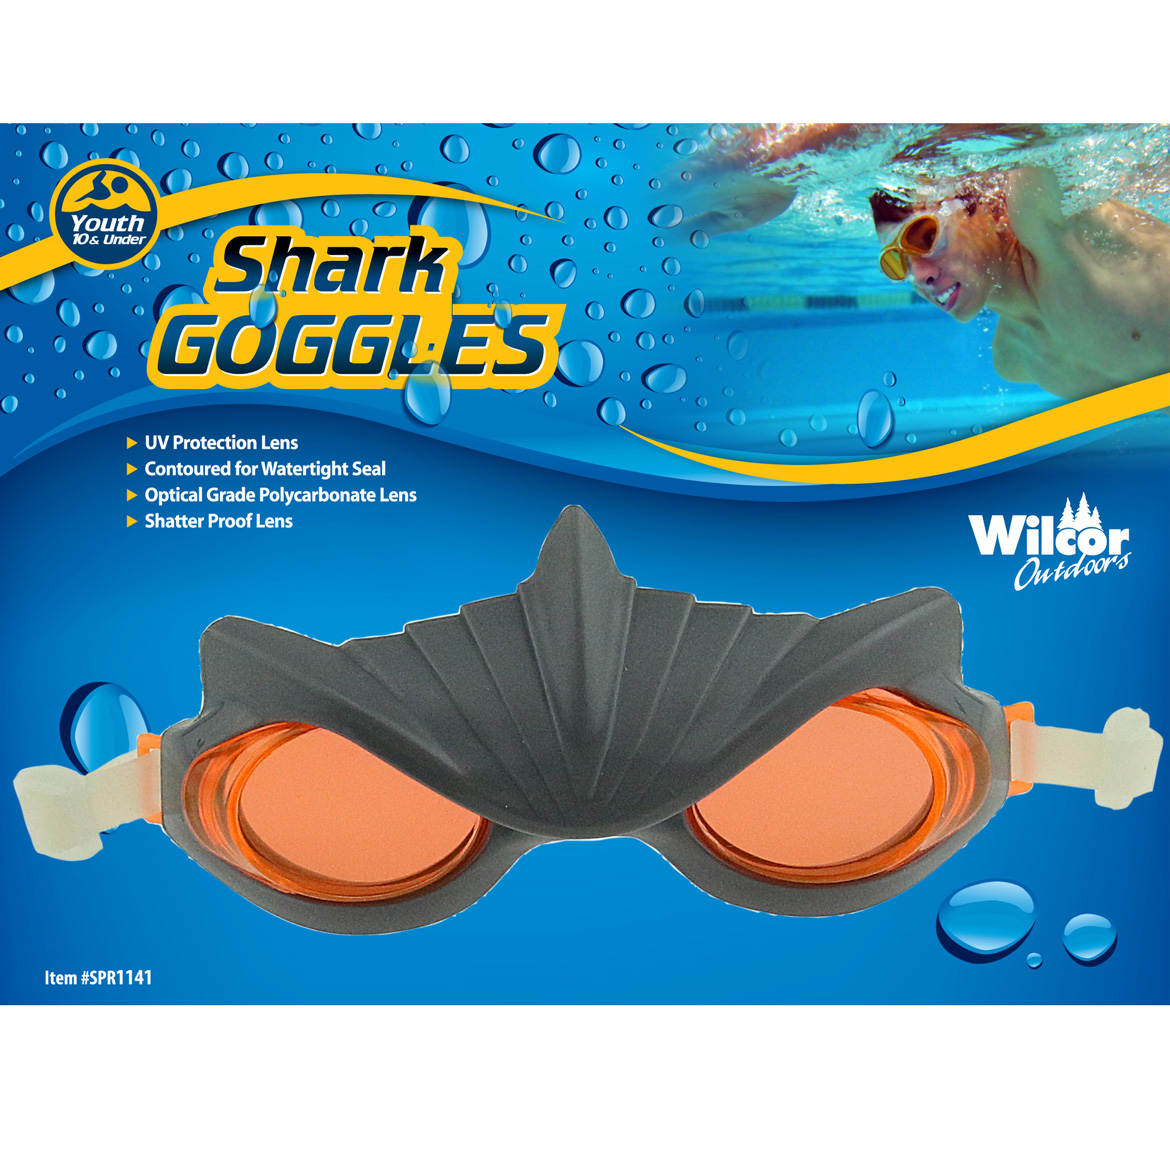 SHARK GOGGLES